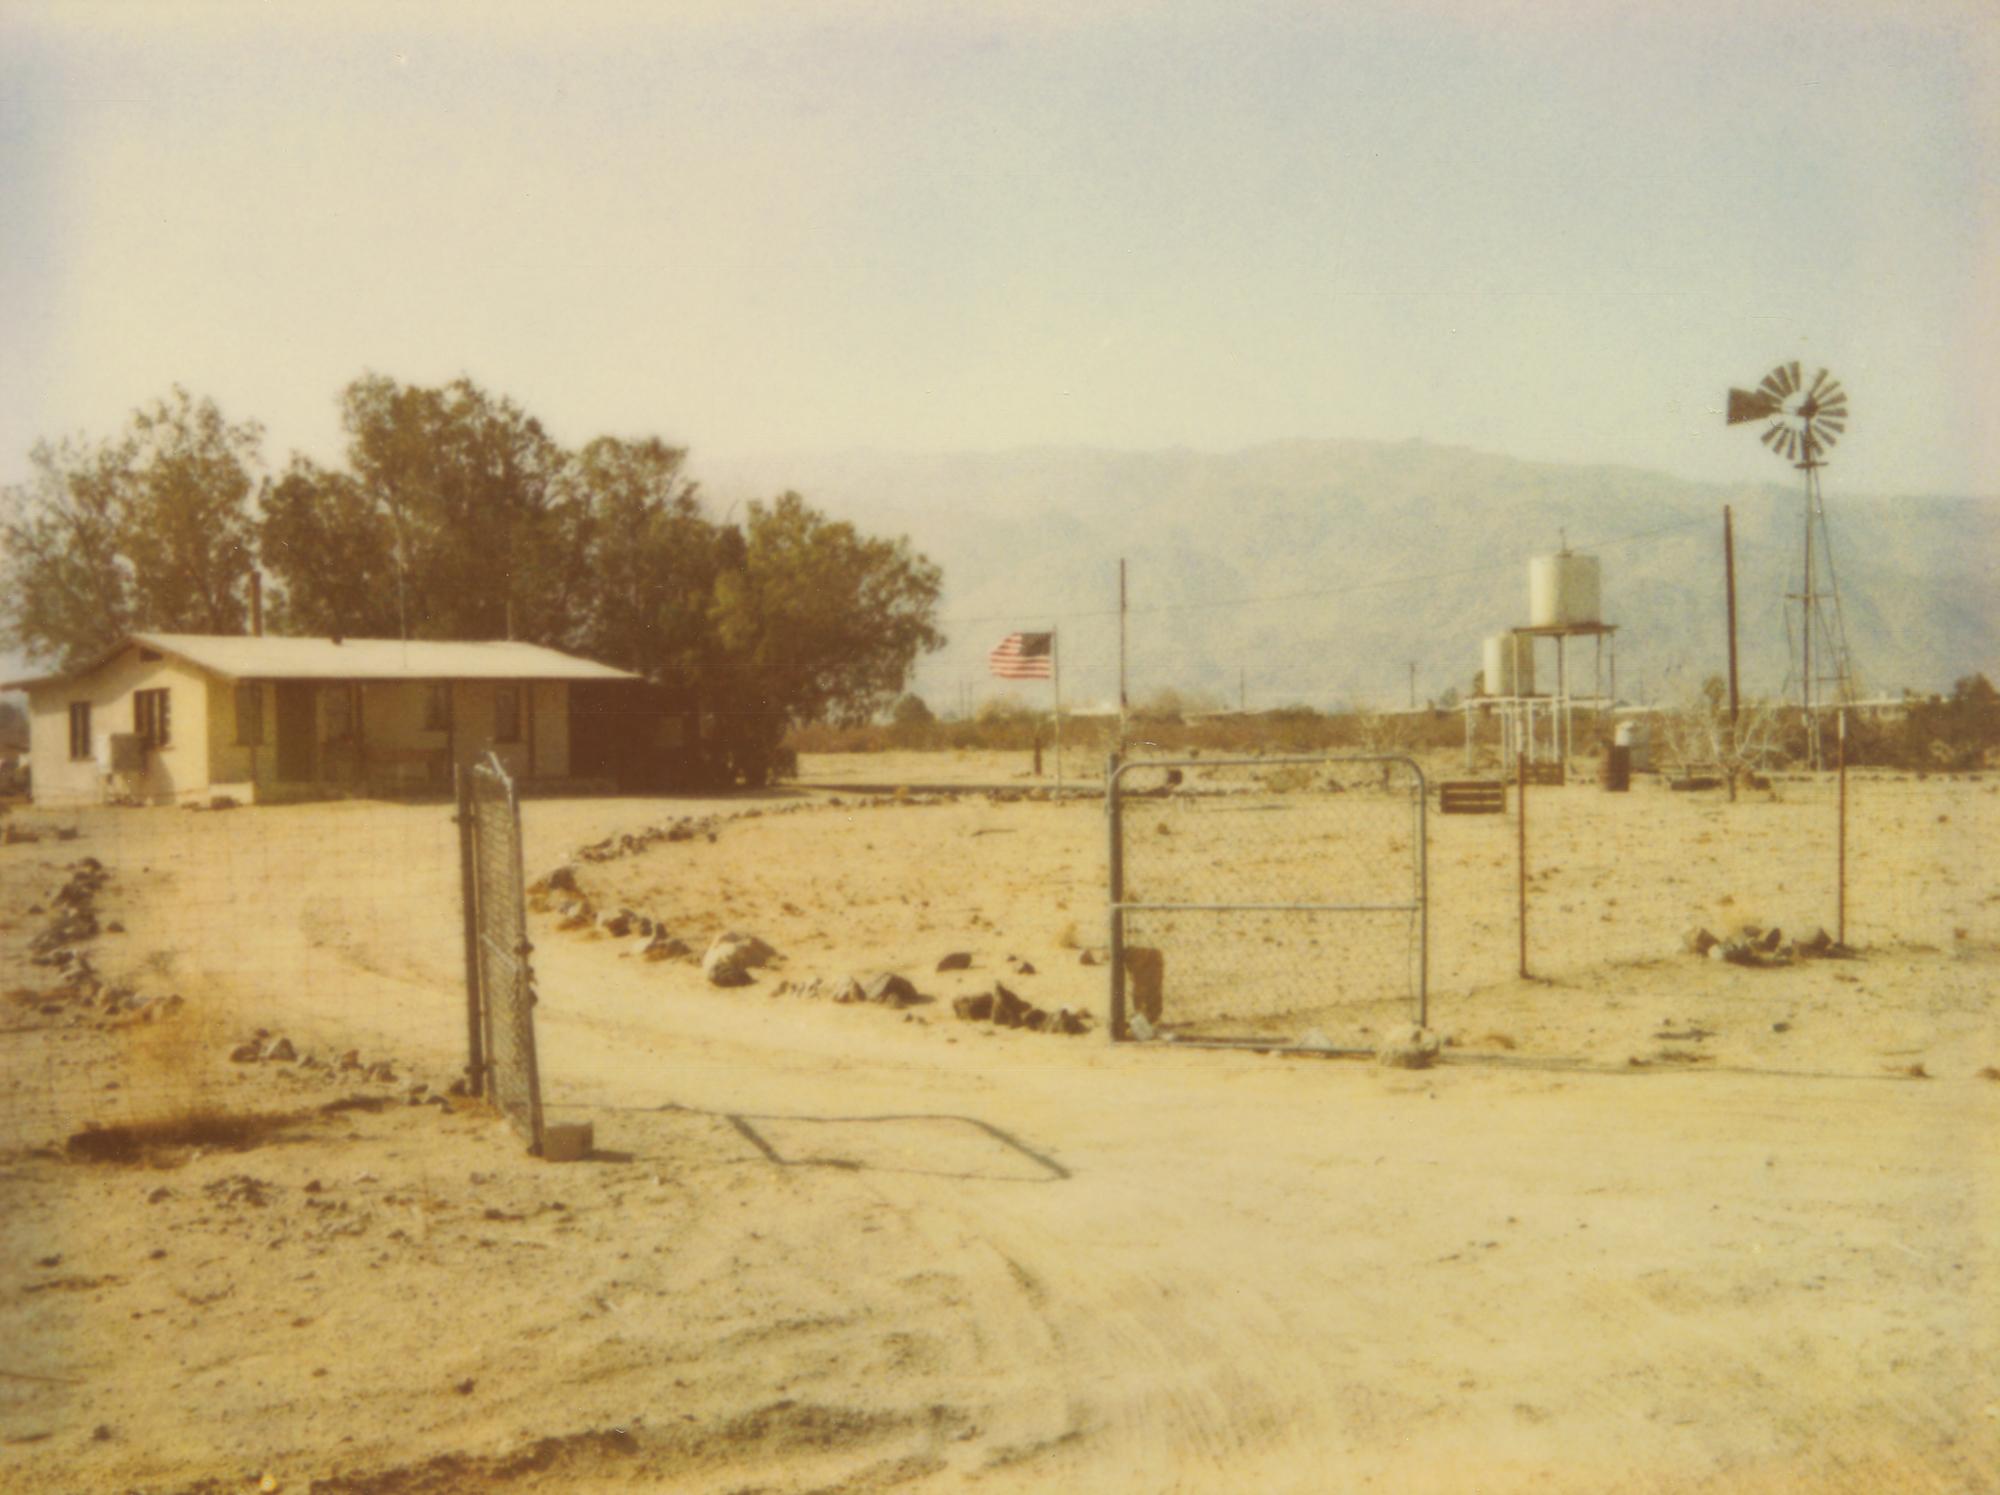 Stefanie Schneider Portrait Photograph – Dust Bowl Farm (American Depression) – analog